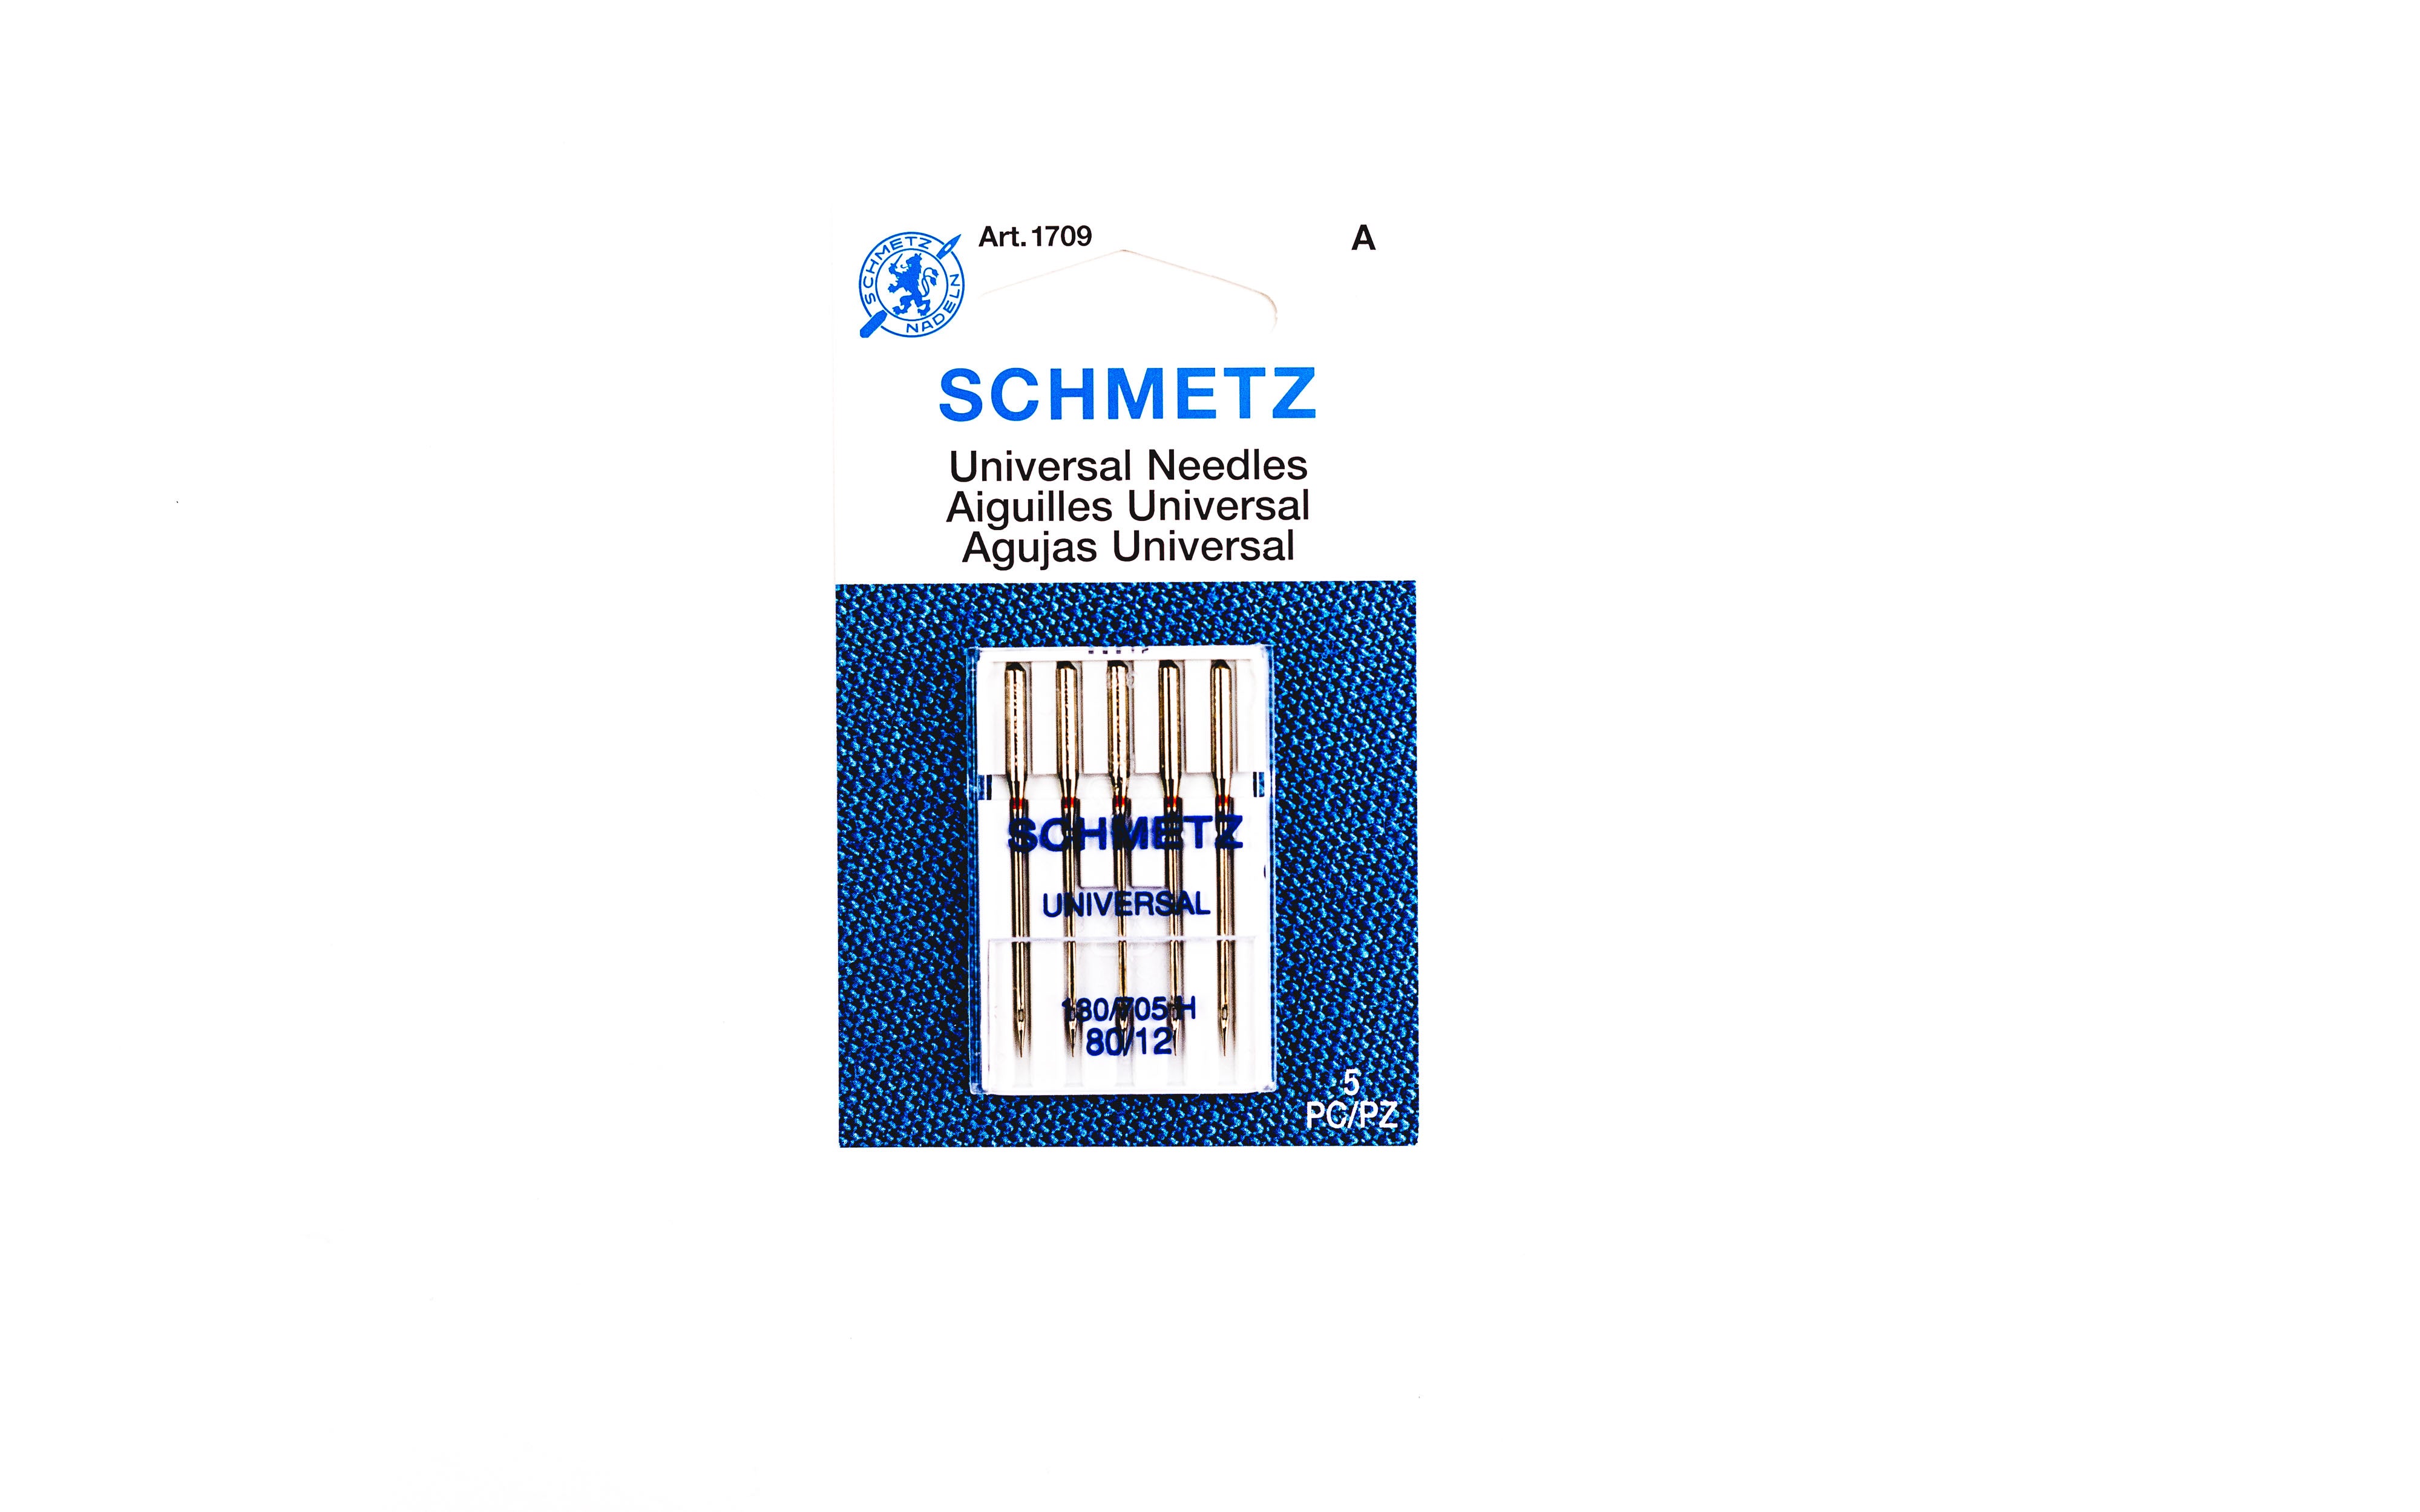 Schmetz Universal Needles - 80/12 - Ten per card